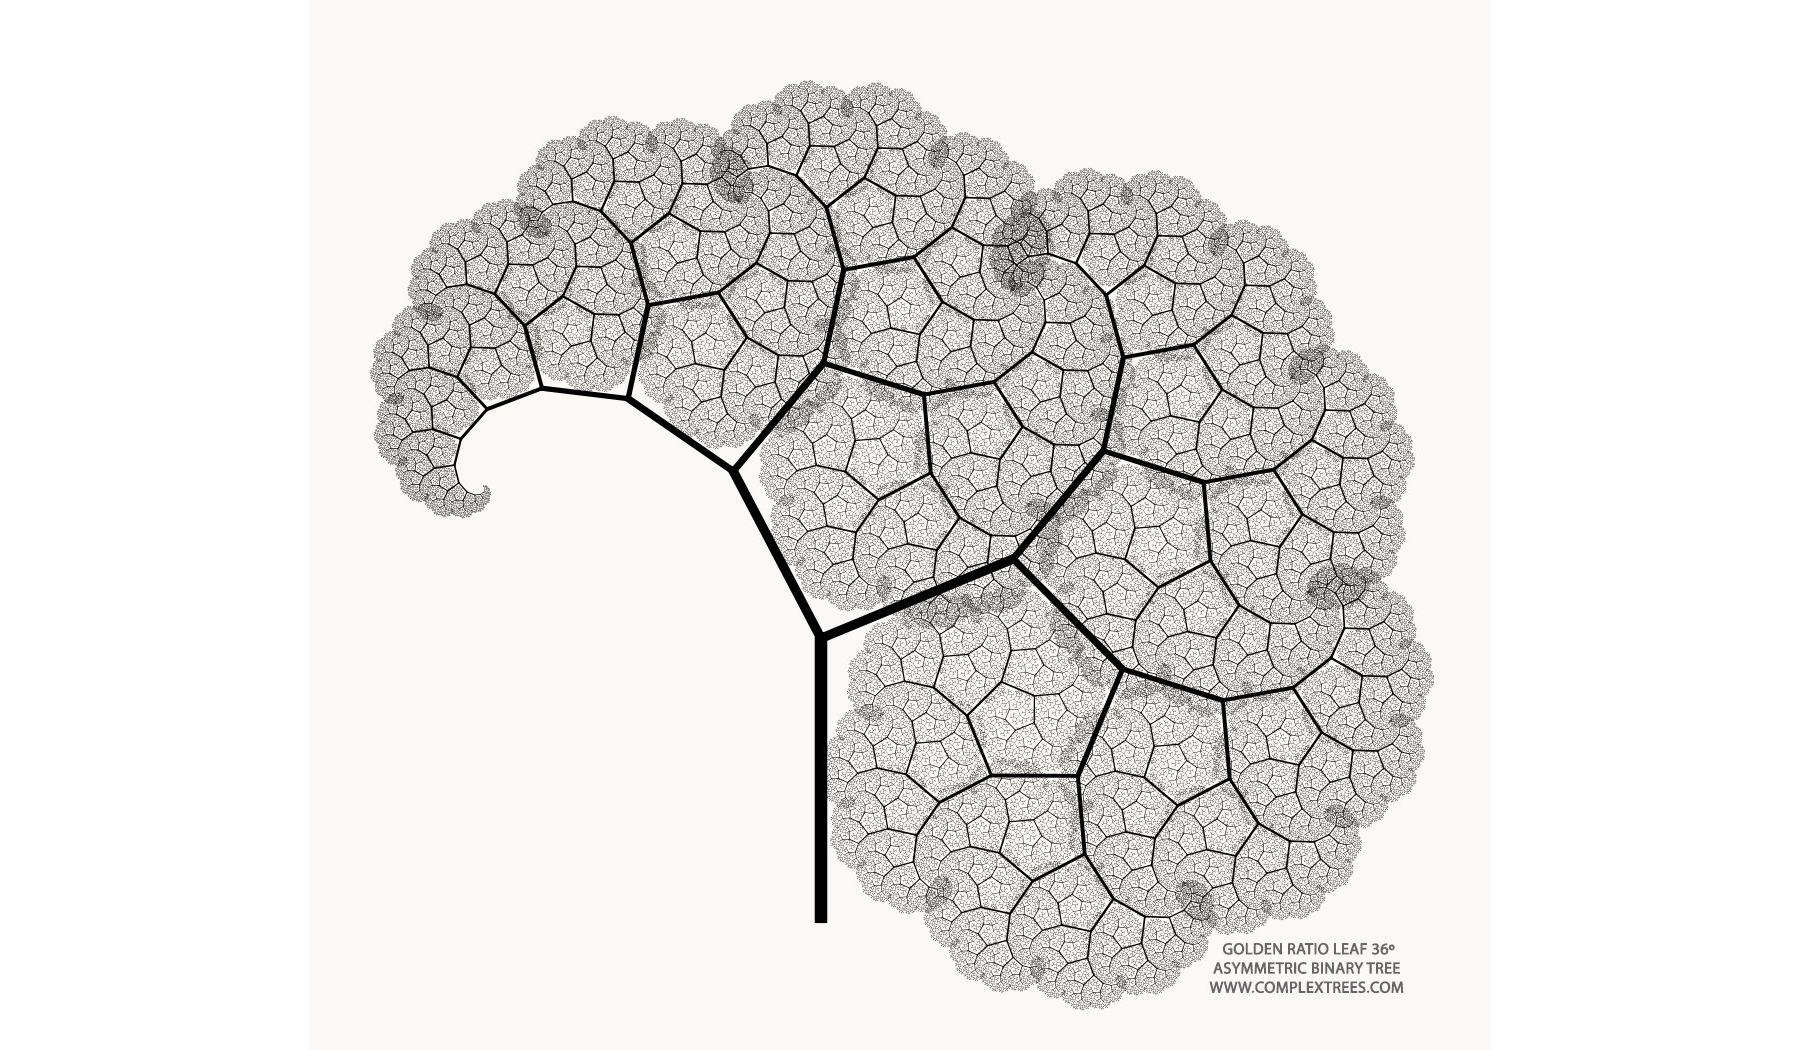 Golden Ratio Leaf Binary Tree - Complextrees.com